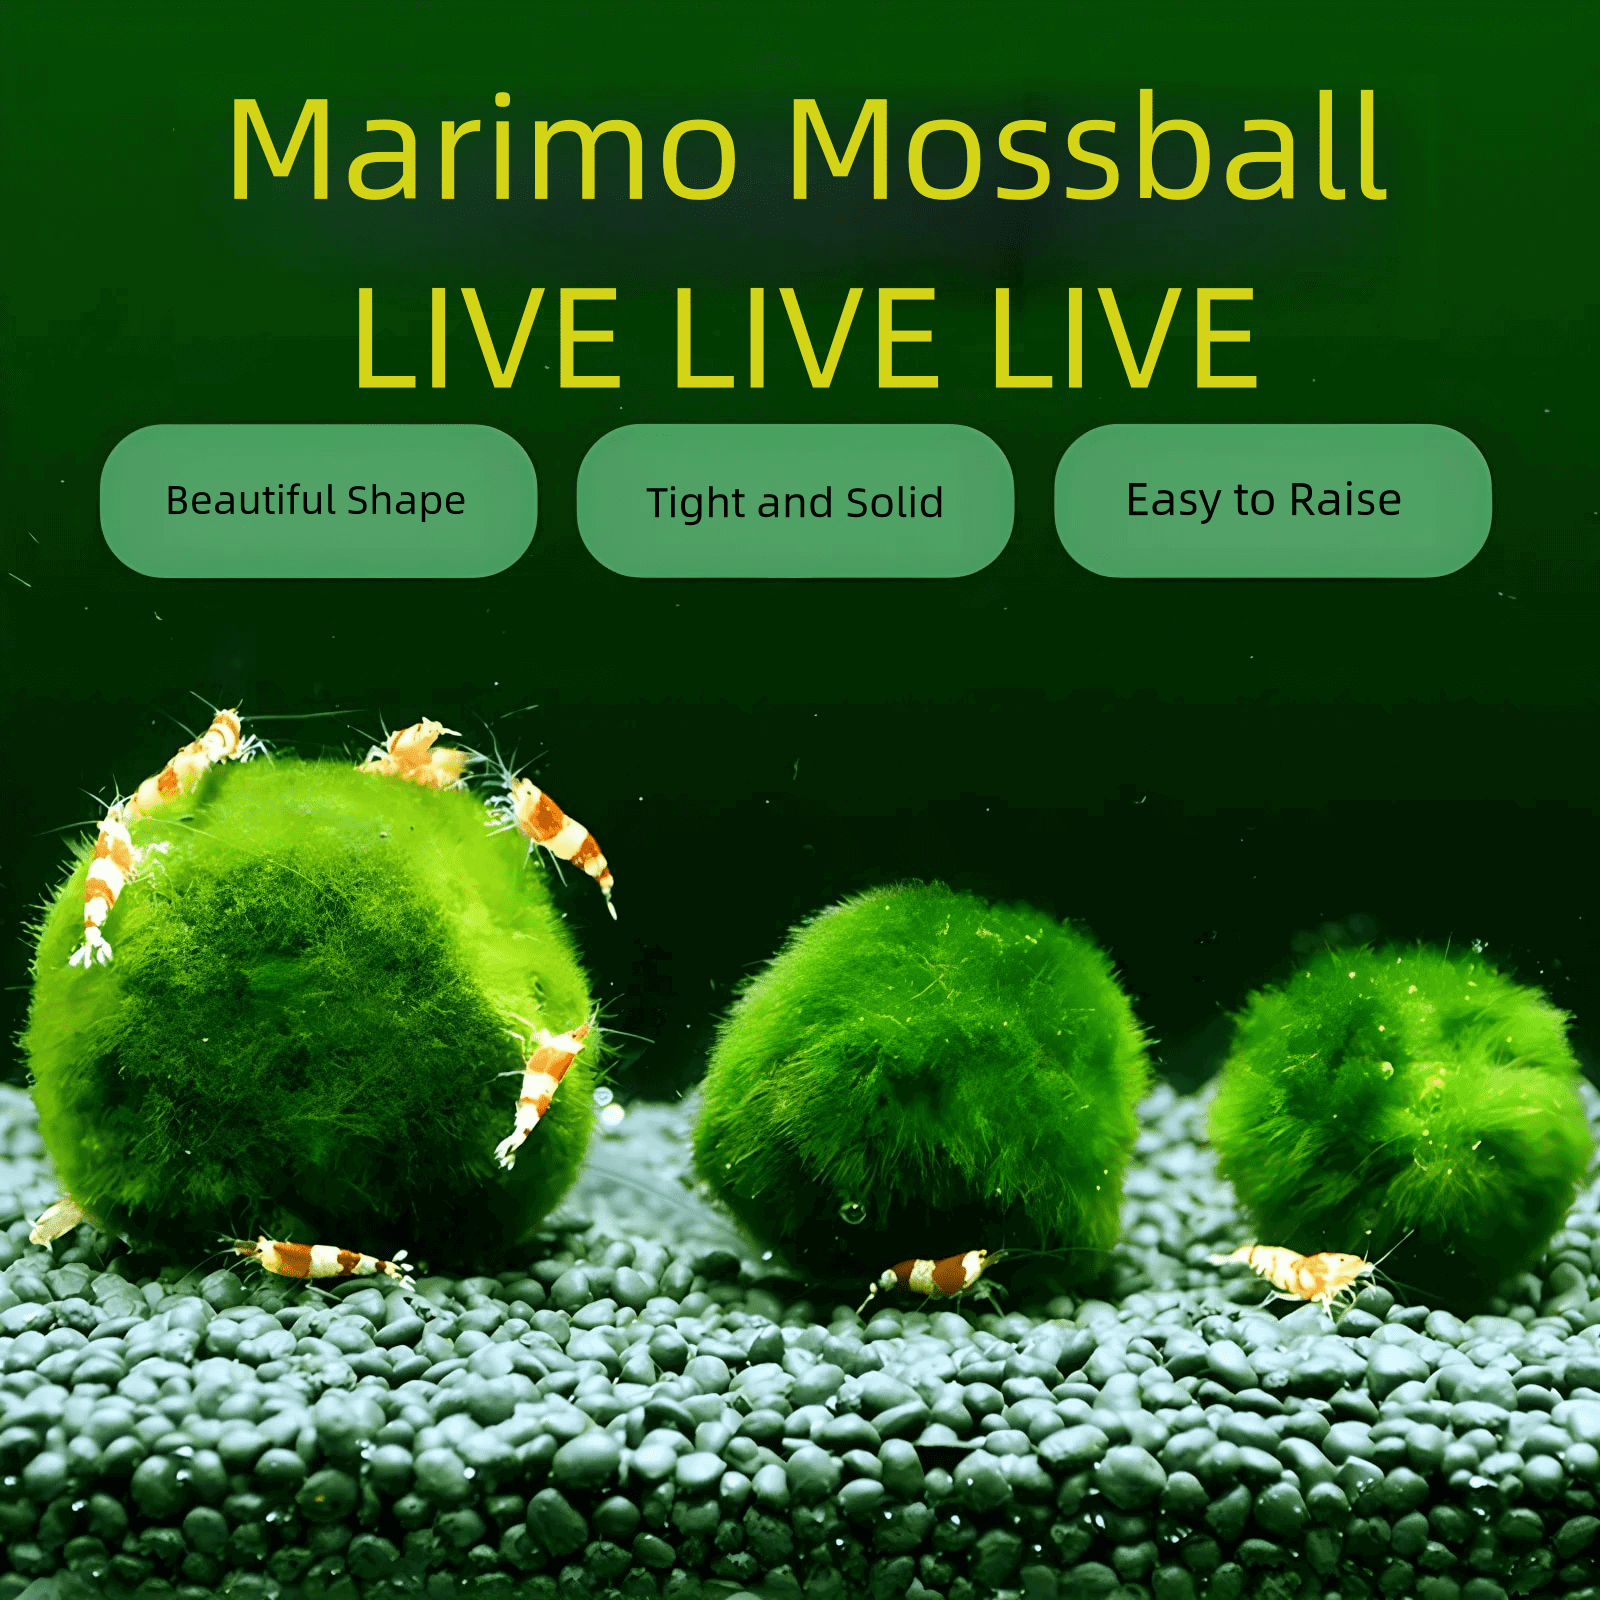 Giant Marimo Moss Ball Pet Rare 5-6 cm LIVE Kokedama Japanese Algae Ball Mossball